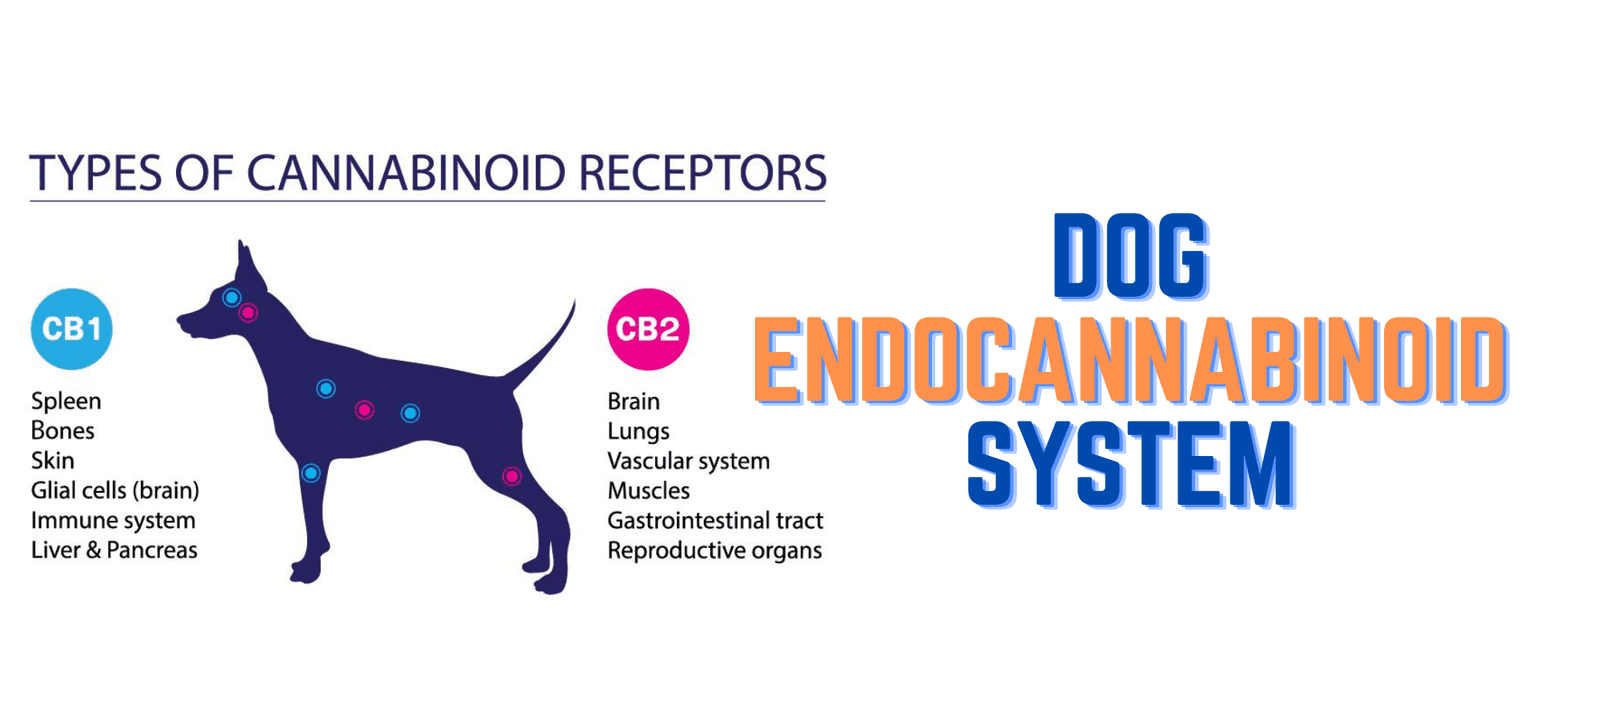 Dog Endocannabinoid System